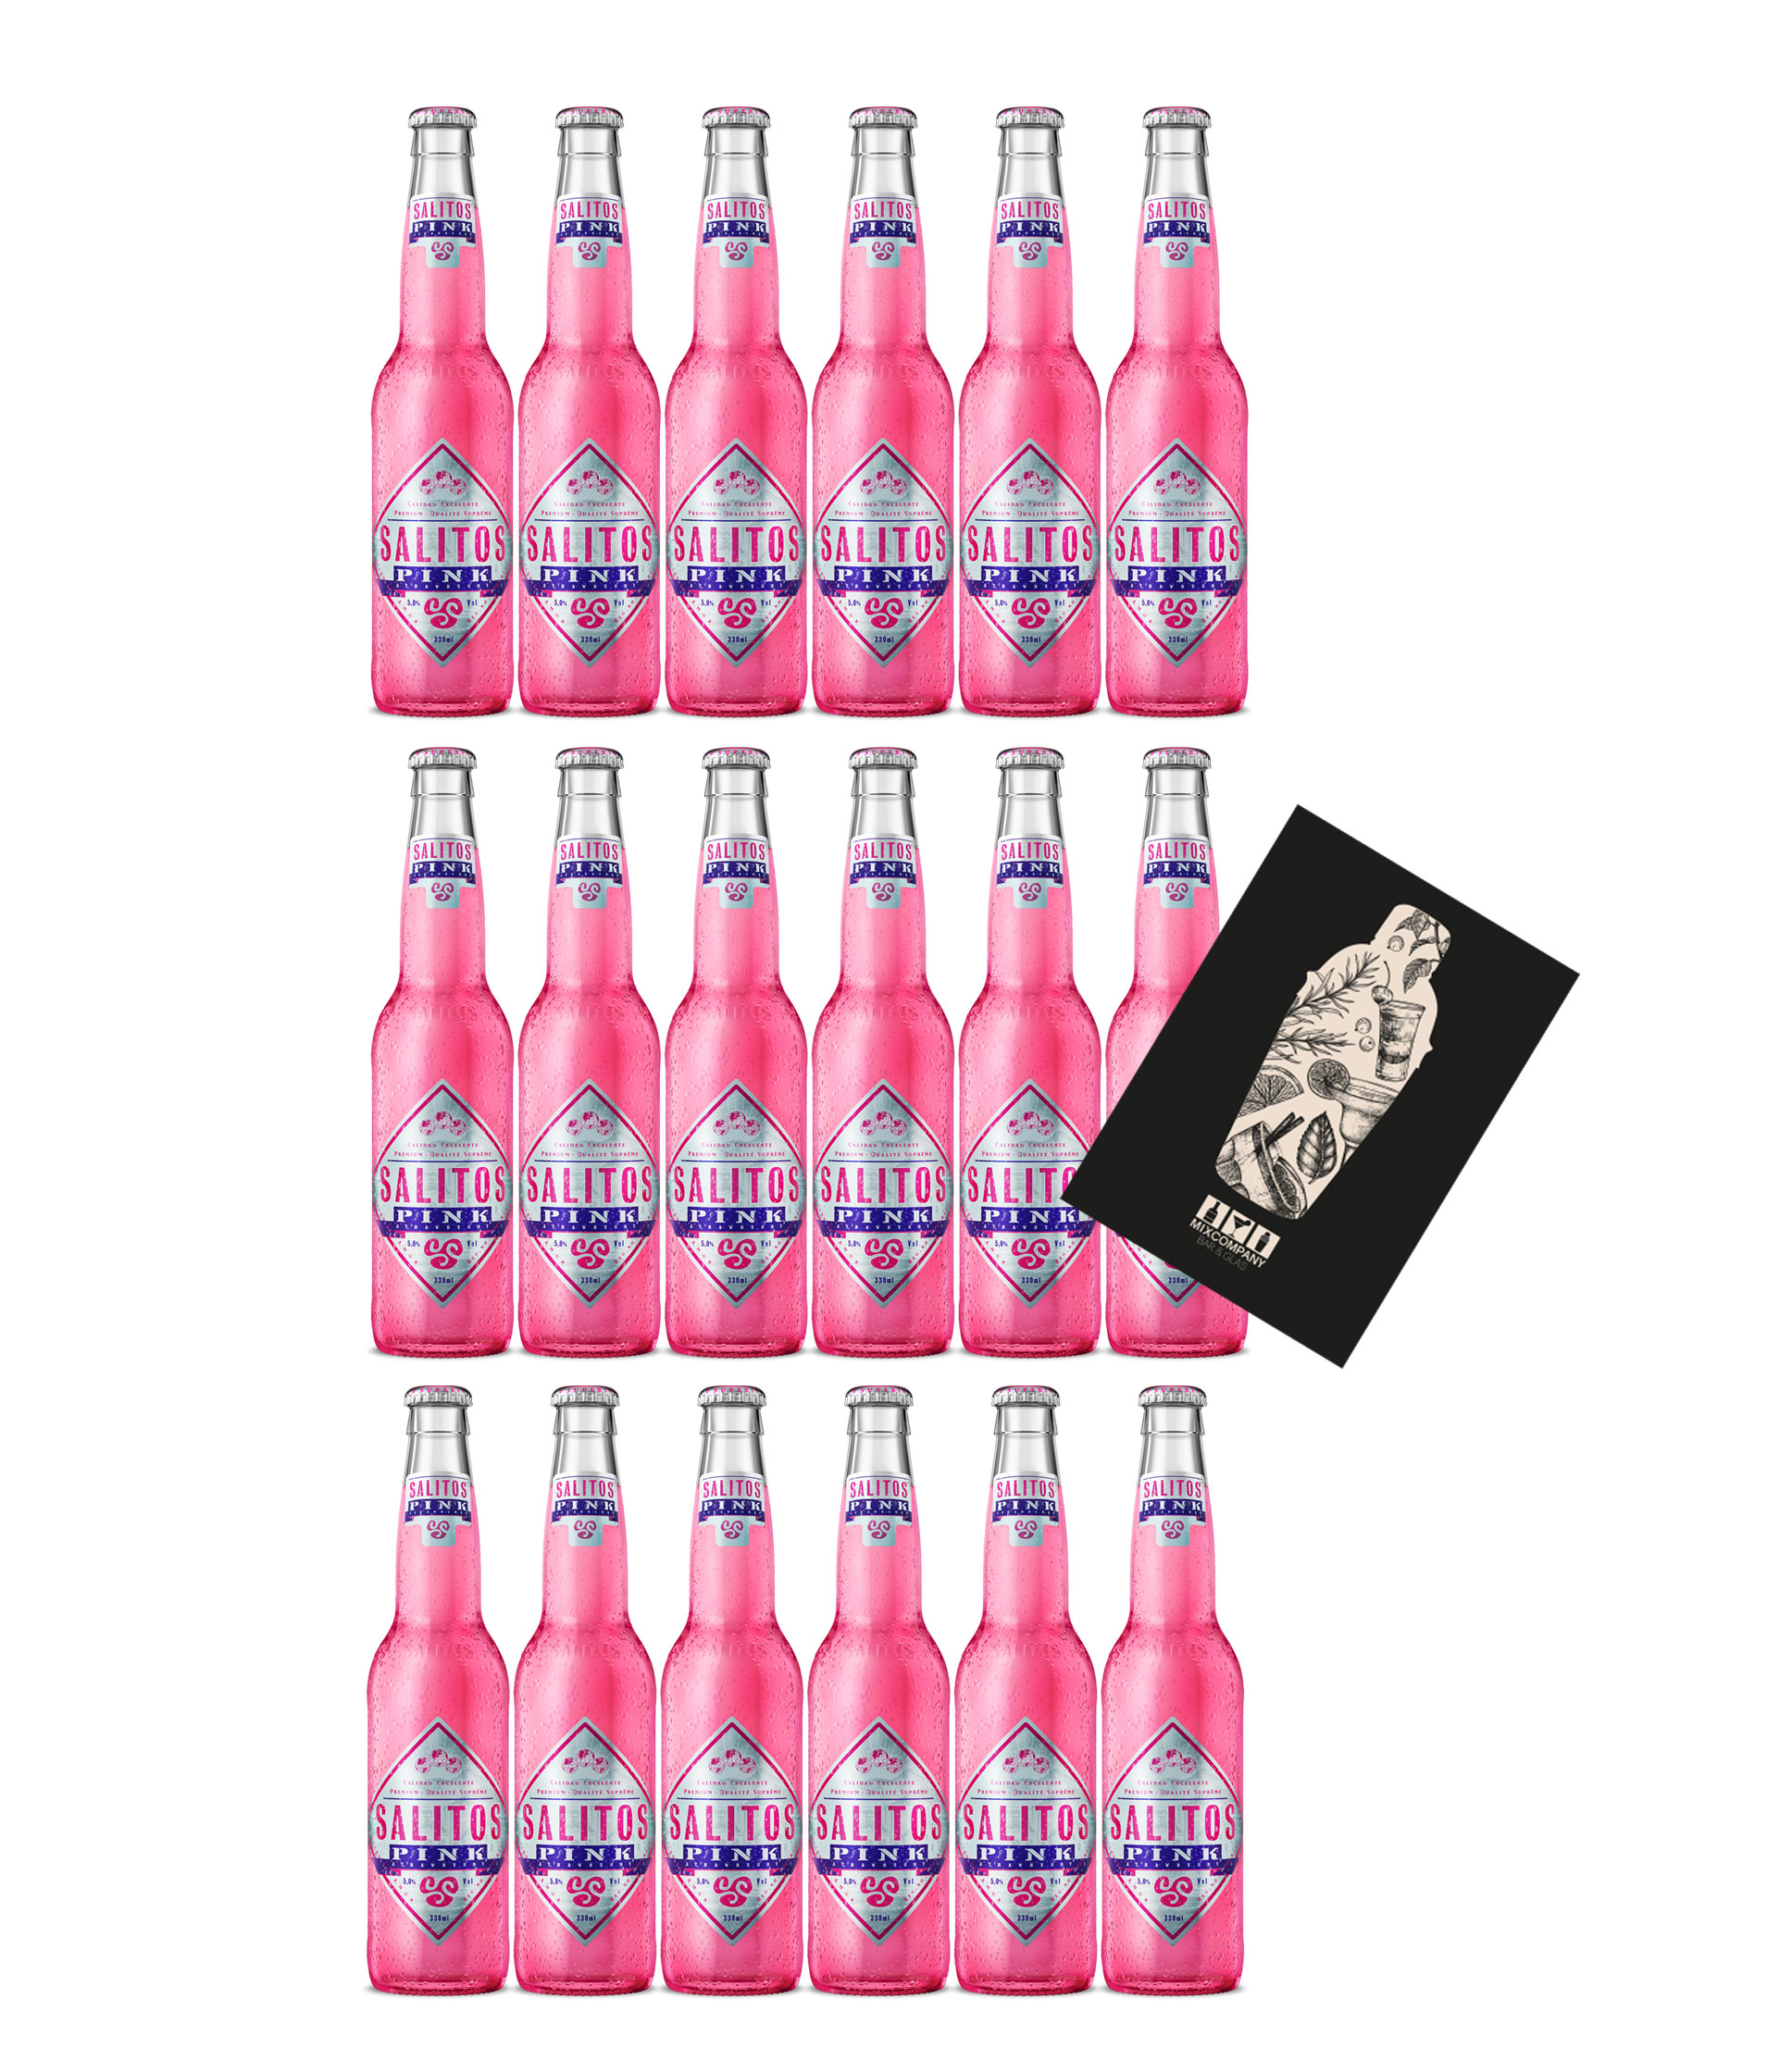 Salitos 18er Set Bier Salitos Pink Beer 18x 0,33L (5% Vol) inkl. Pfand MEHRWEG mit Mixcompany Grußkarte- [Enthält Sulfite]